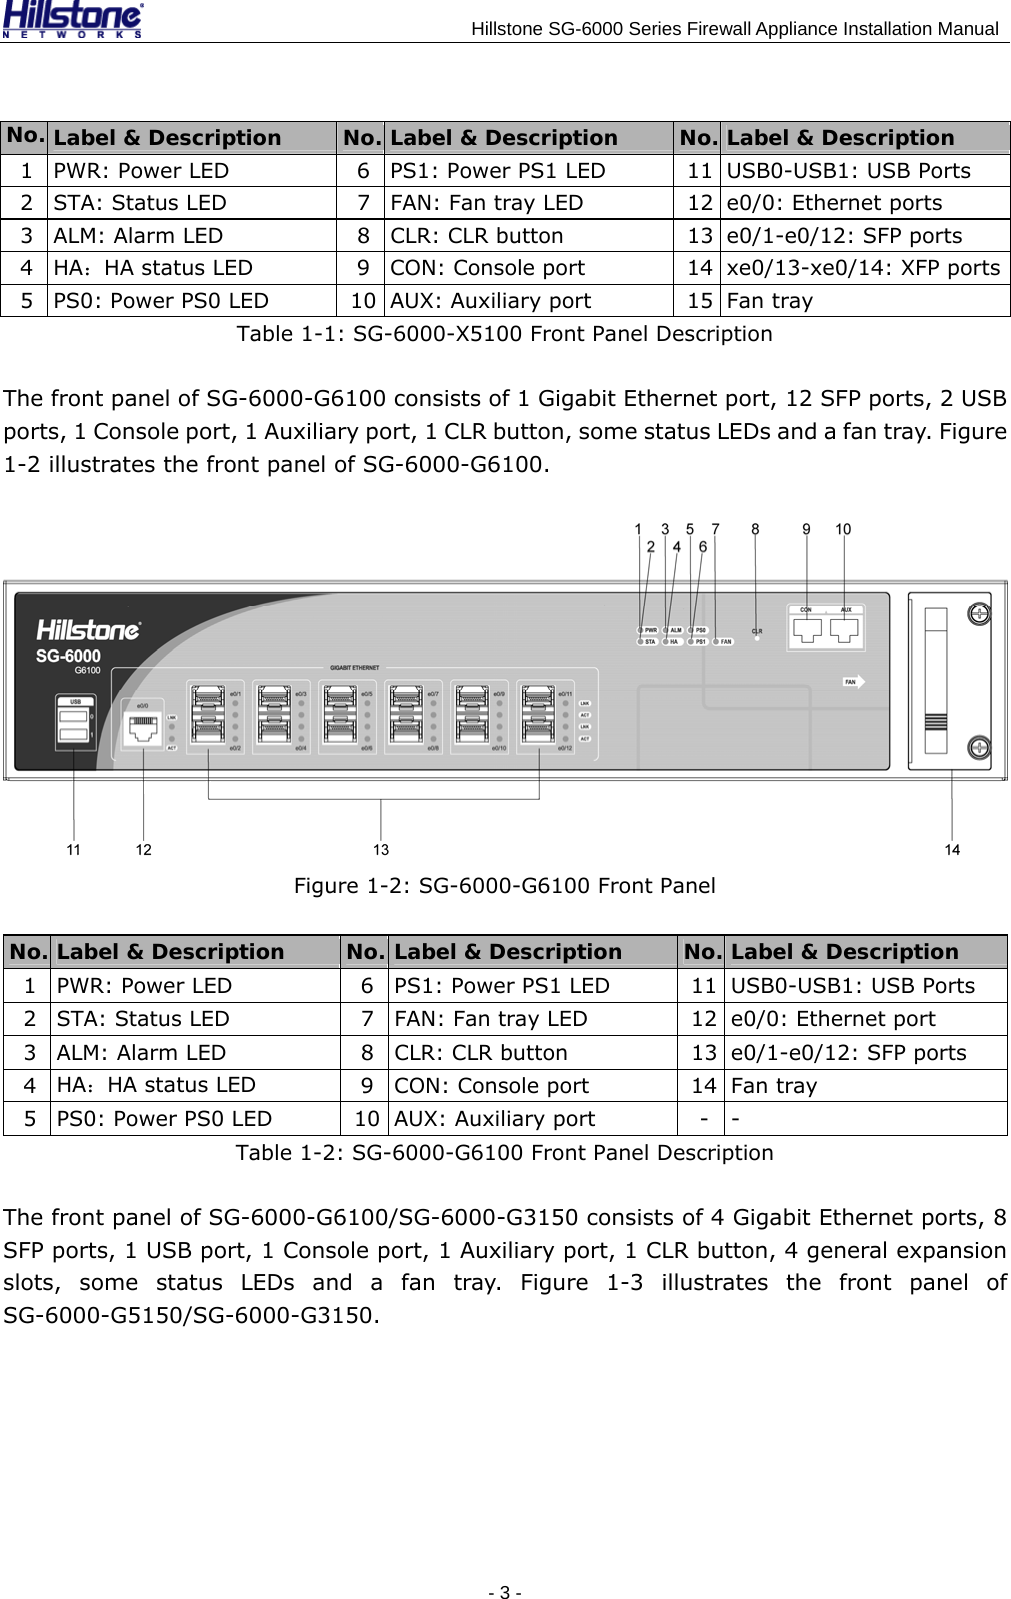                                    Hillstone SG-6000 Series Firewall Appliance Installation Manual No. Label &amp; Description  No. Label &amp; Description  No. Label &amp; Description 1  PWR: Power LED  6  PS1: Power PS1 LED  11 USB0-USB1: USB Ports 2  STA: Status LED  7  FAN: Fan tray LED  12 e0/0: Ethernet ports 3  ALM: Alarm LED  8  CLR: CLR button  13 e0/1-e0/12: SFP ports 4  HA：HA status LED  9  CON: Console port  14 xe0/13-xe0/14: XFP ports 5  PS0: Power PS0 LED  10  AUX: Auxiliary port  15 Fan tray Table 1-1: SG-6000-X5100 Front Panel Description The front panel of SG-6000-G6100 consists of 1 Gigabit Ethernet port, 12 SFP ports, 2 USB ports, 1 Console port, 1 Auxiliary port, 1 CLR button, some status LEDs and a fan tray. Figure 1-2 illustrates the front panel of SG-6000-G6100.  Figure 1-2: SG-6000-G6100 Front Panel No. Label &amp; Description No. Label &amp; Description No. Label &amp; Description 1  PWR: Power LED  6  PS1: Power PS1 LED 11 USB0-USB1: USB Ports 2  STA: Status LED  7  FAN: Fan tray LED 12 e0/0: Ethernet port 3  ALM: Alarm LED  8  CLR: CLR button  13 e0/1-e0/12: SFP ports 4  HA：HA status LED  9  CON: Console port  14 Fan tray 5  PS0: Power PS0 LED  10  AUX: Auxiliary port  - - Table 1-2: SG-6000-G6100 Front Panel Description The front panel of SG-6000-G6100/SG-6000-G3150 consists of 4 Gigabit Ethernet ports, 8 SFP ports, 1 USB port, 1 Console port, 1 Auxiliary port, 1 CLR button, 4 general expansion slots, some status LEDs and a fan tray. Figure 1-3 illustrates the front panel of SG-6000-G5150/SG-6000-G3150. - 3 -  